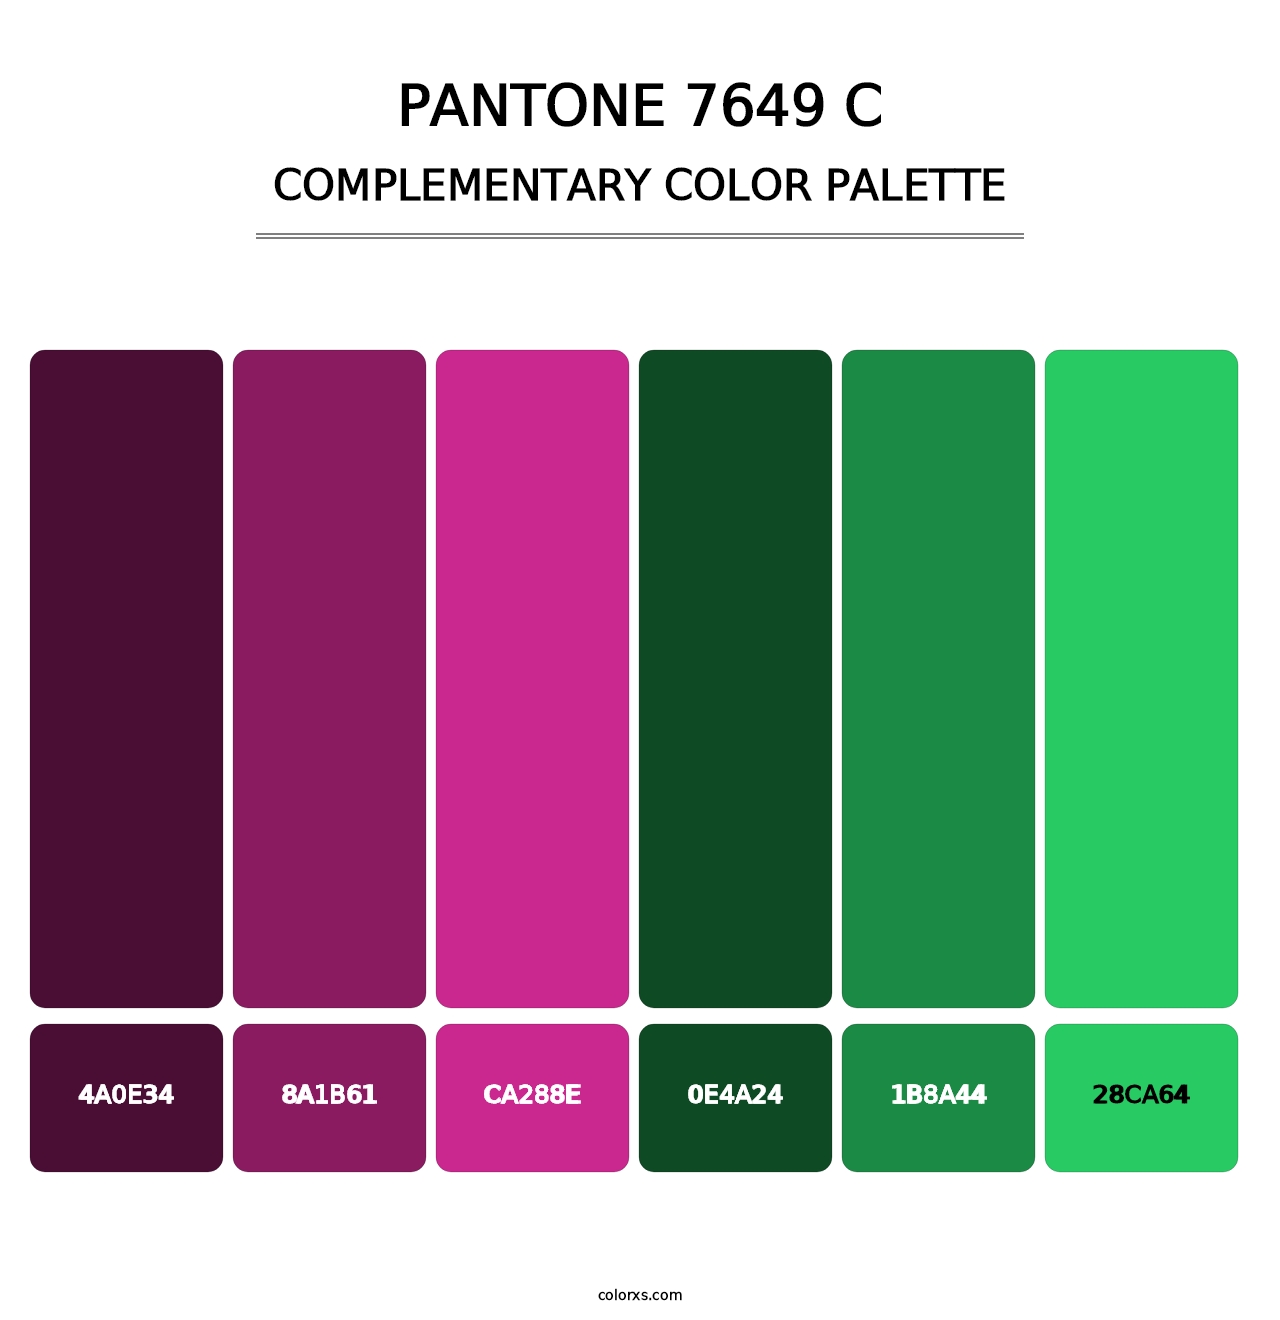 PANTONE 7649 C - Complementary Color Palette